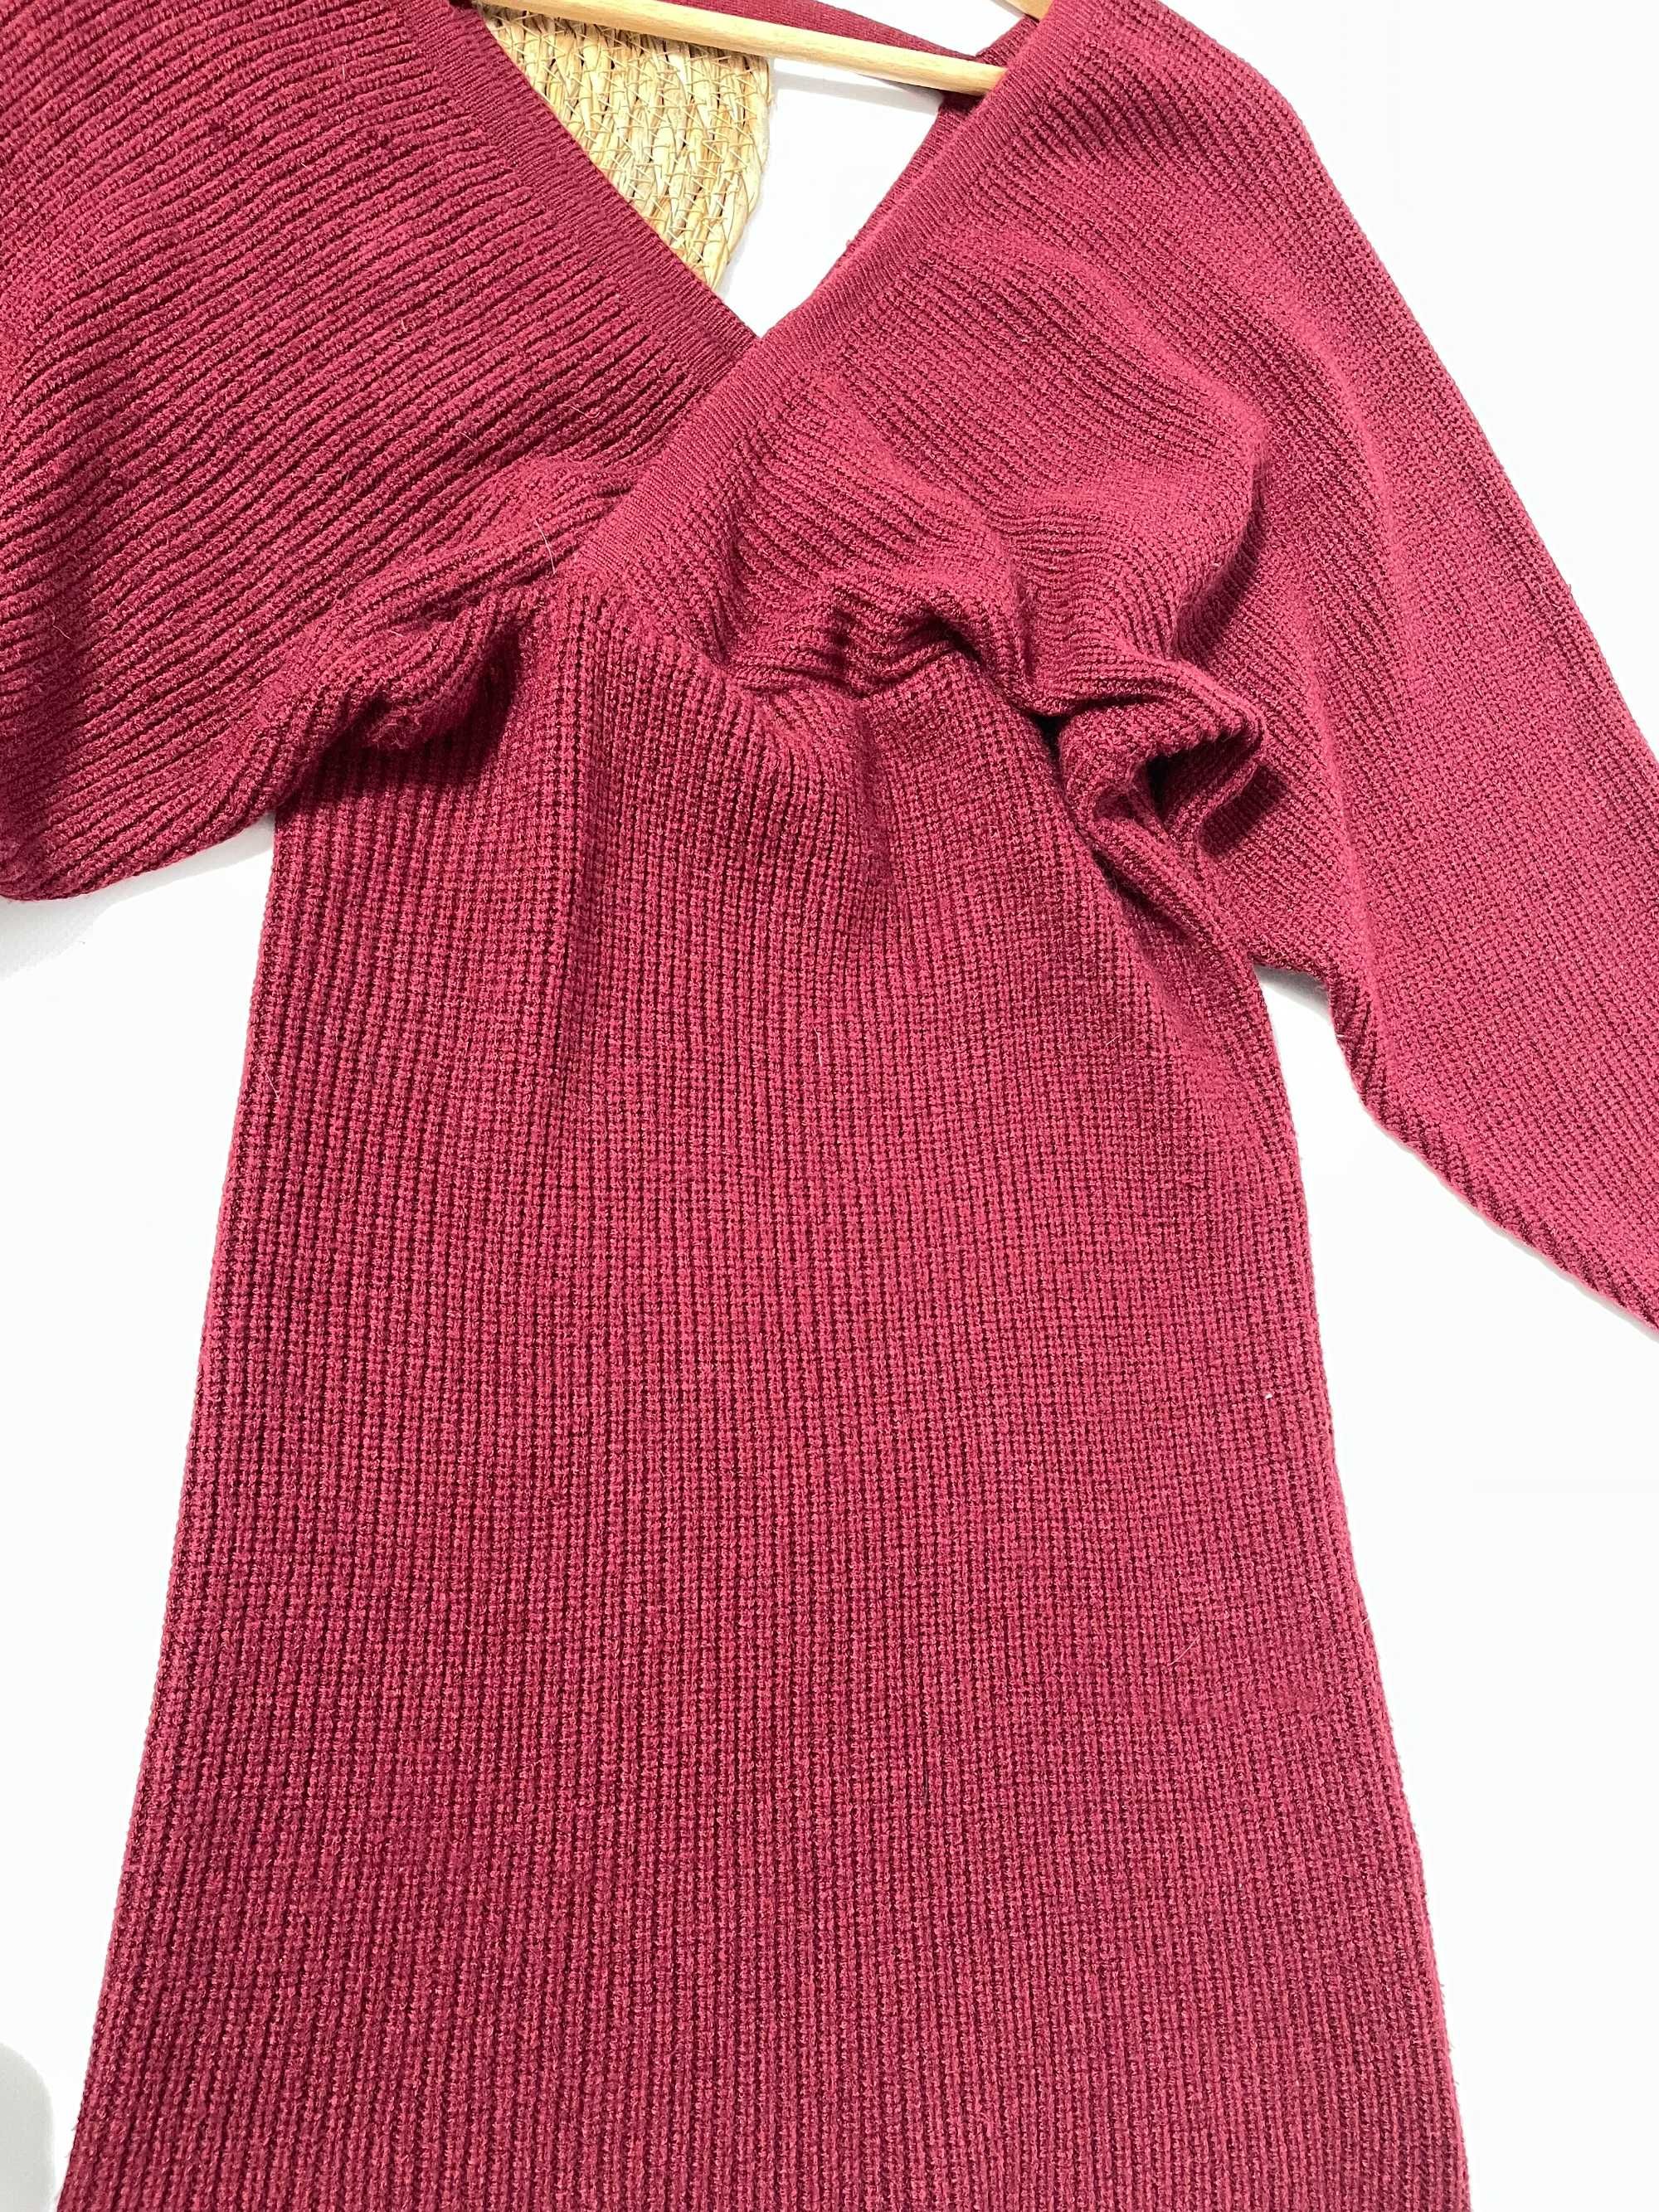 Damska bordowa sukienka sweter Shein XS(34)